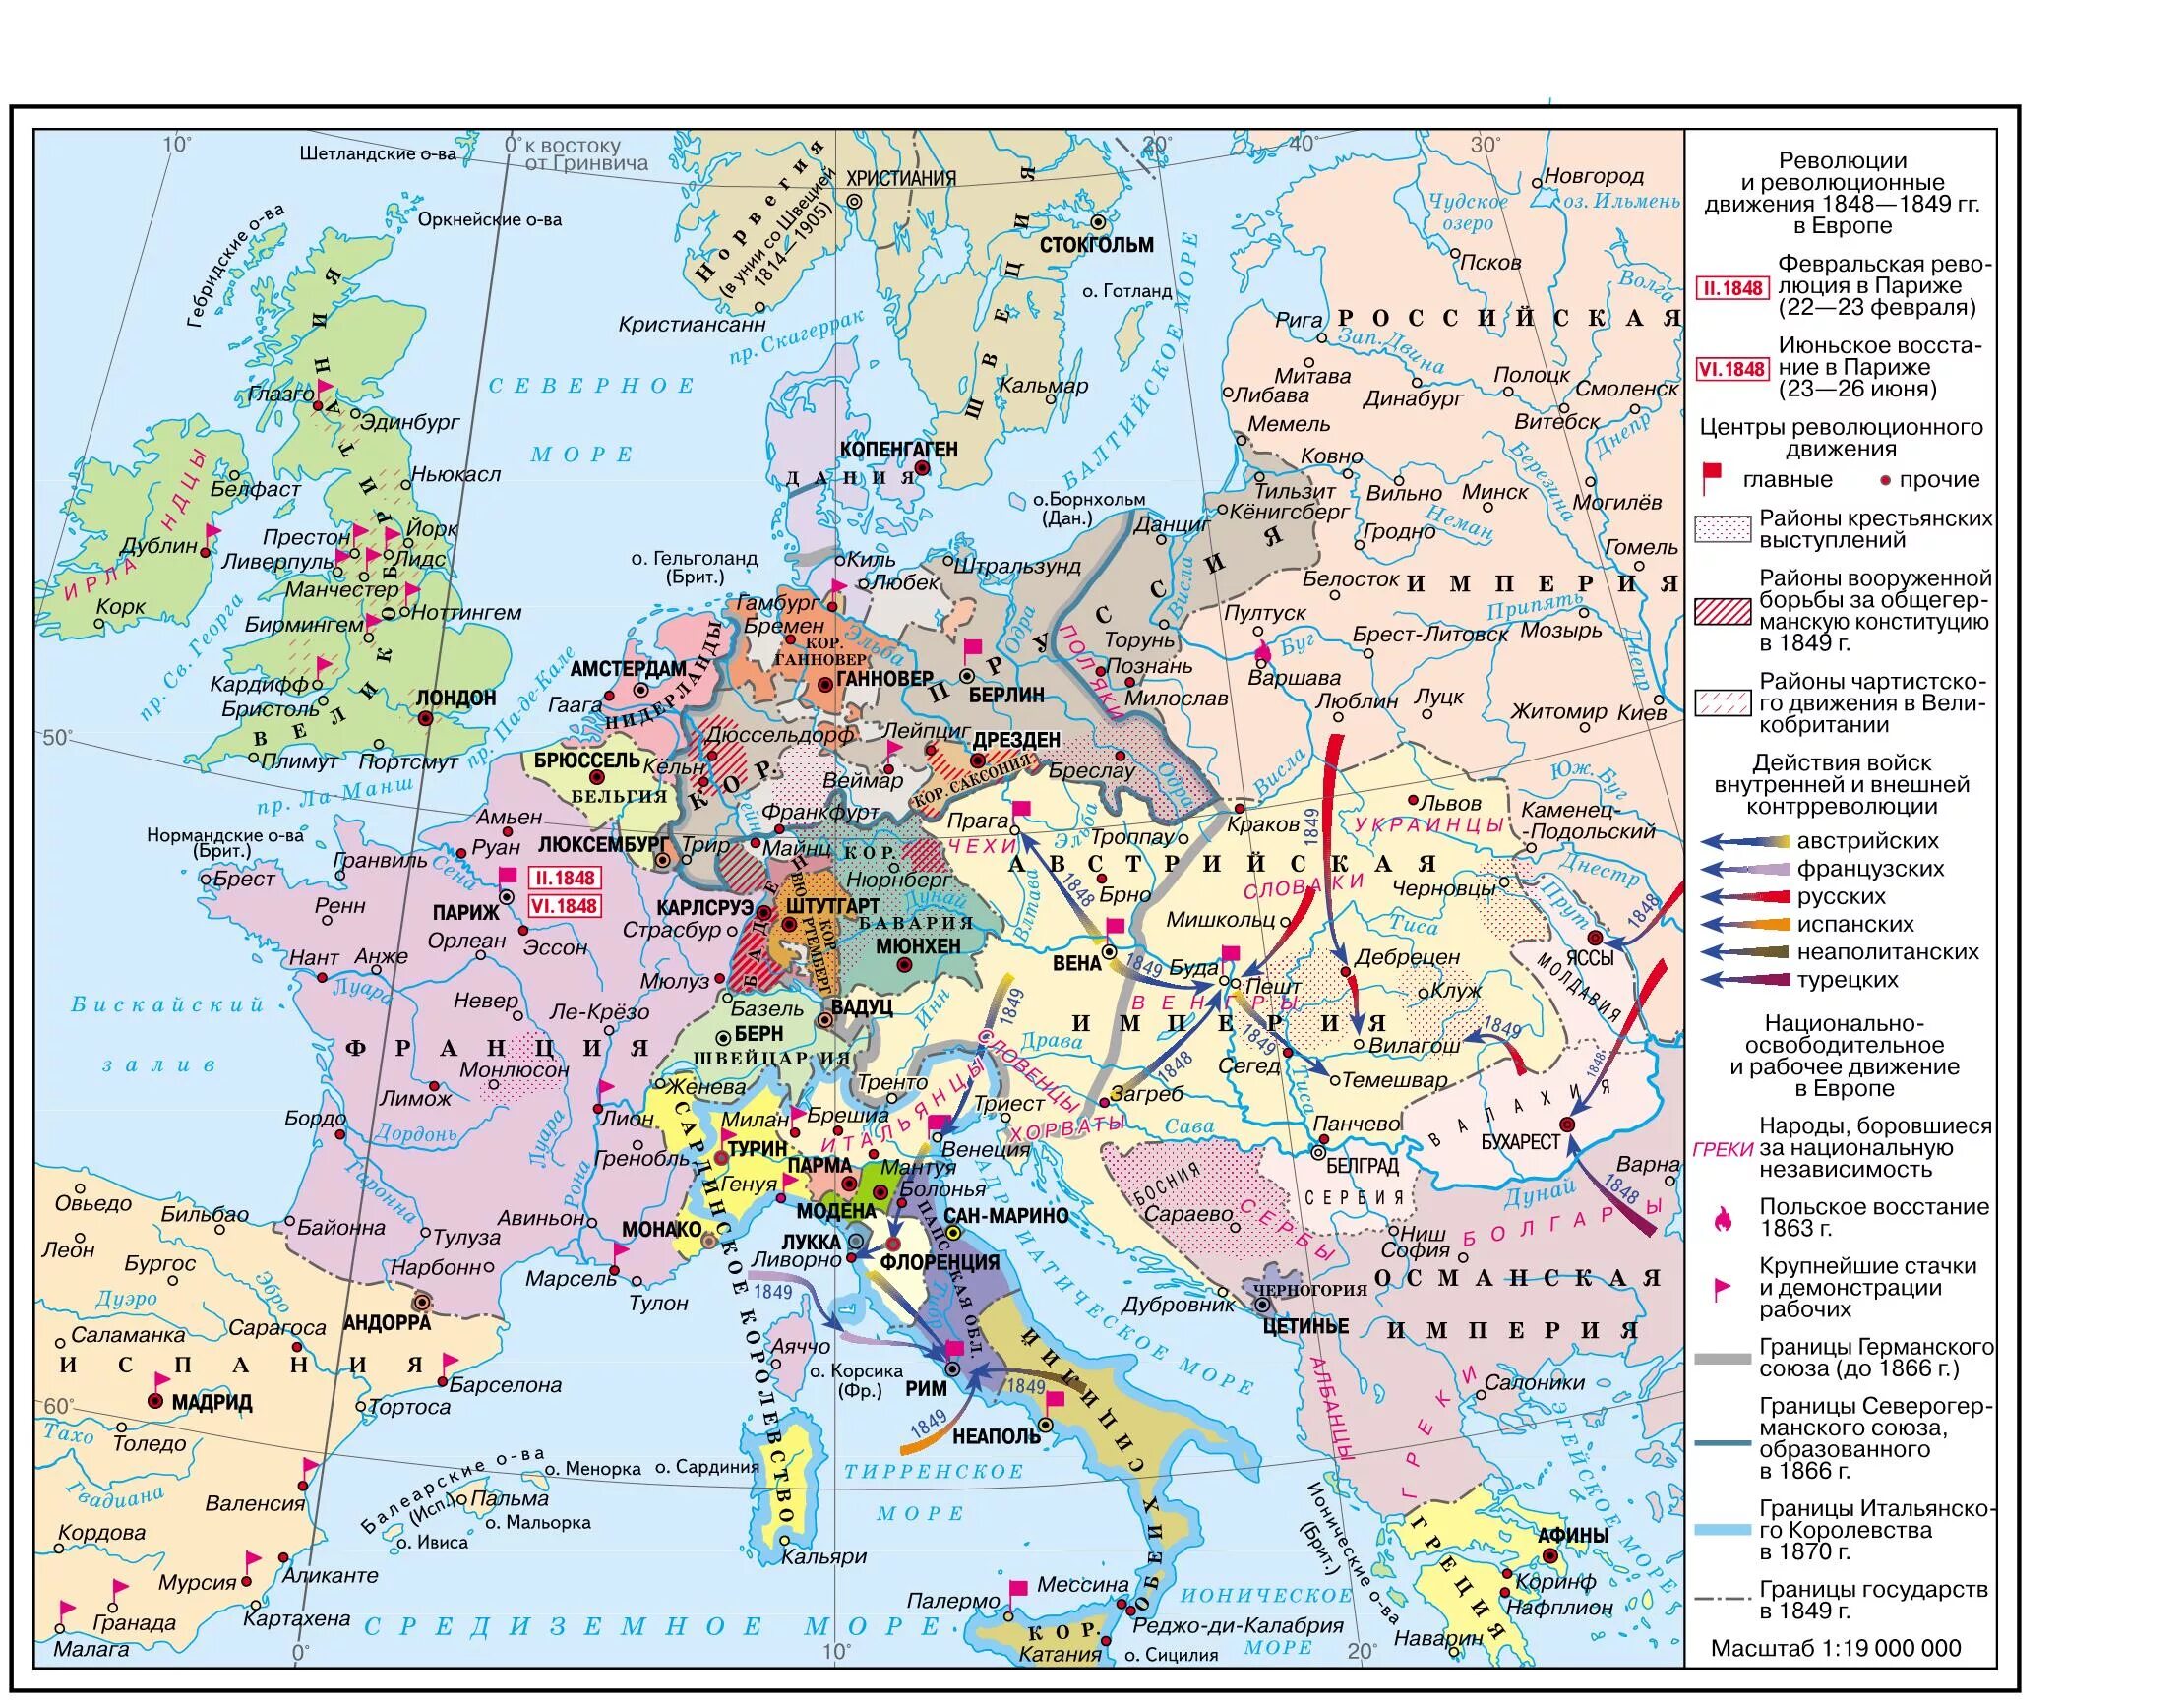 Революции в европе в 19 в. Карта революции 1848-1849 в Европе. Контурная карта революции 1848-1849 гг в Европе. Революция во Франции 1848 карта. Карта революции 1848 года в Европе.